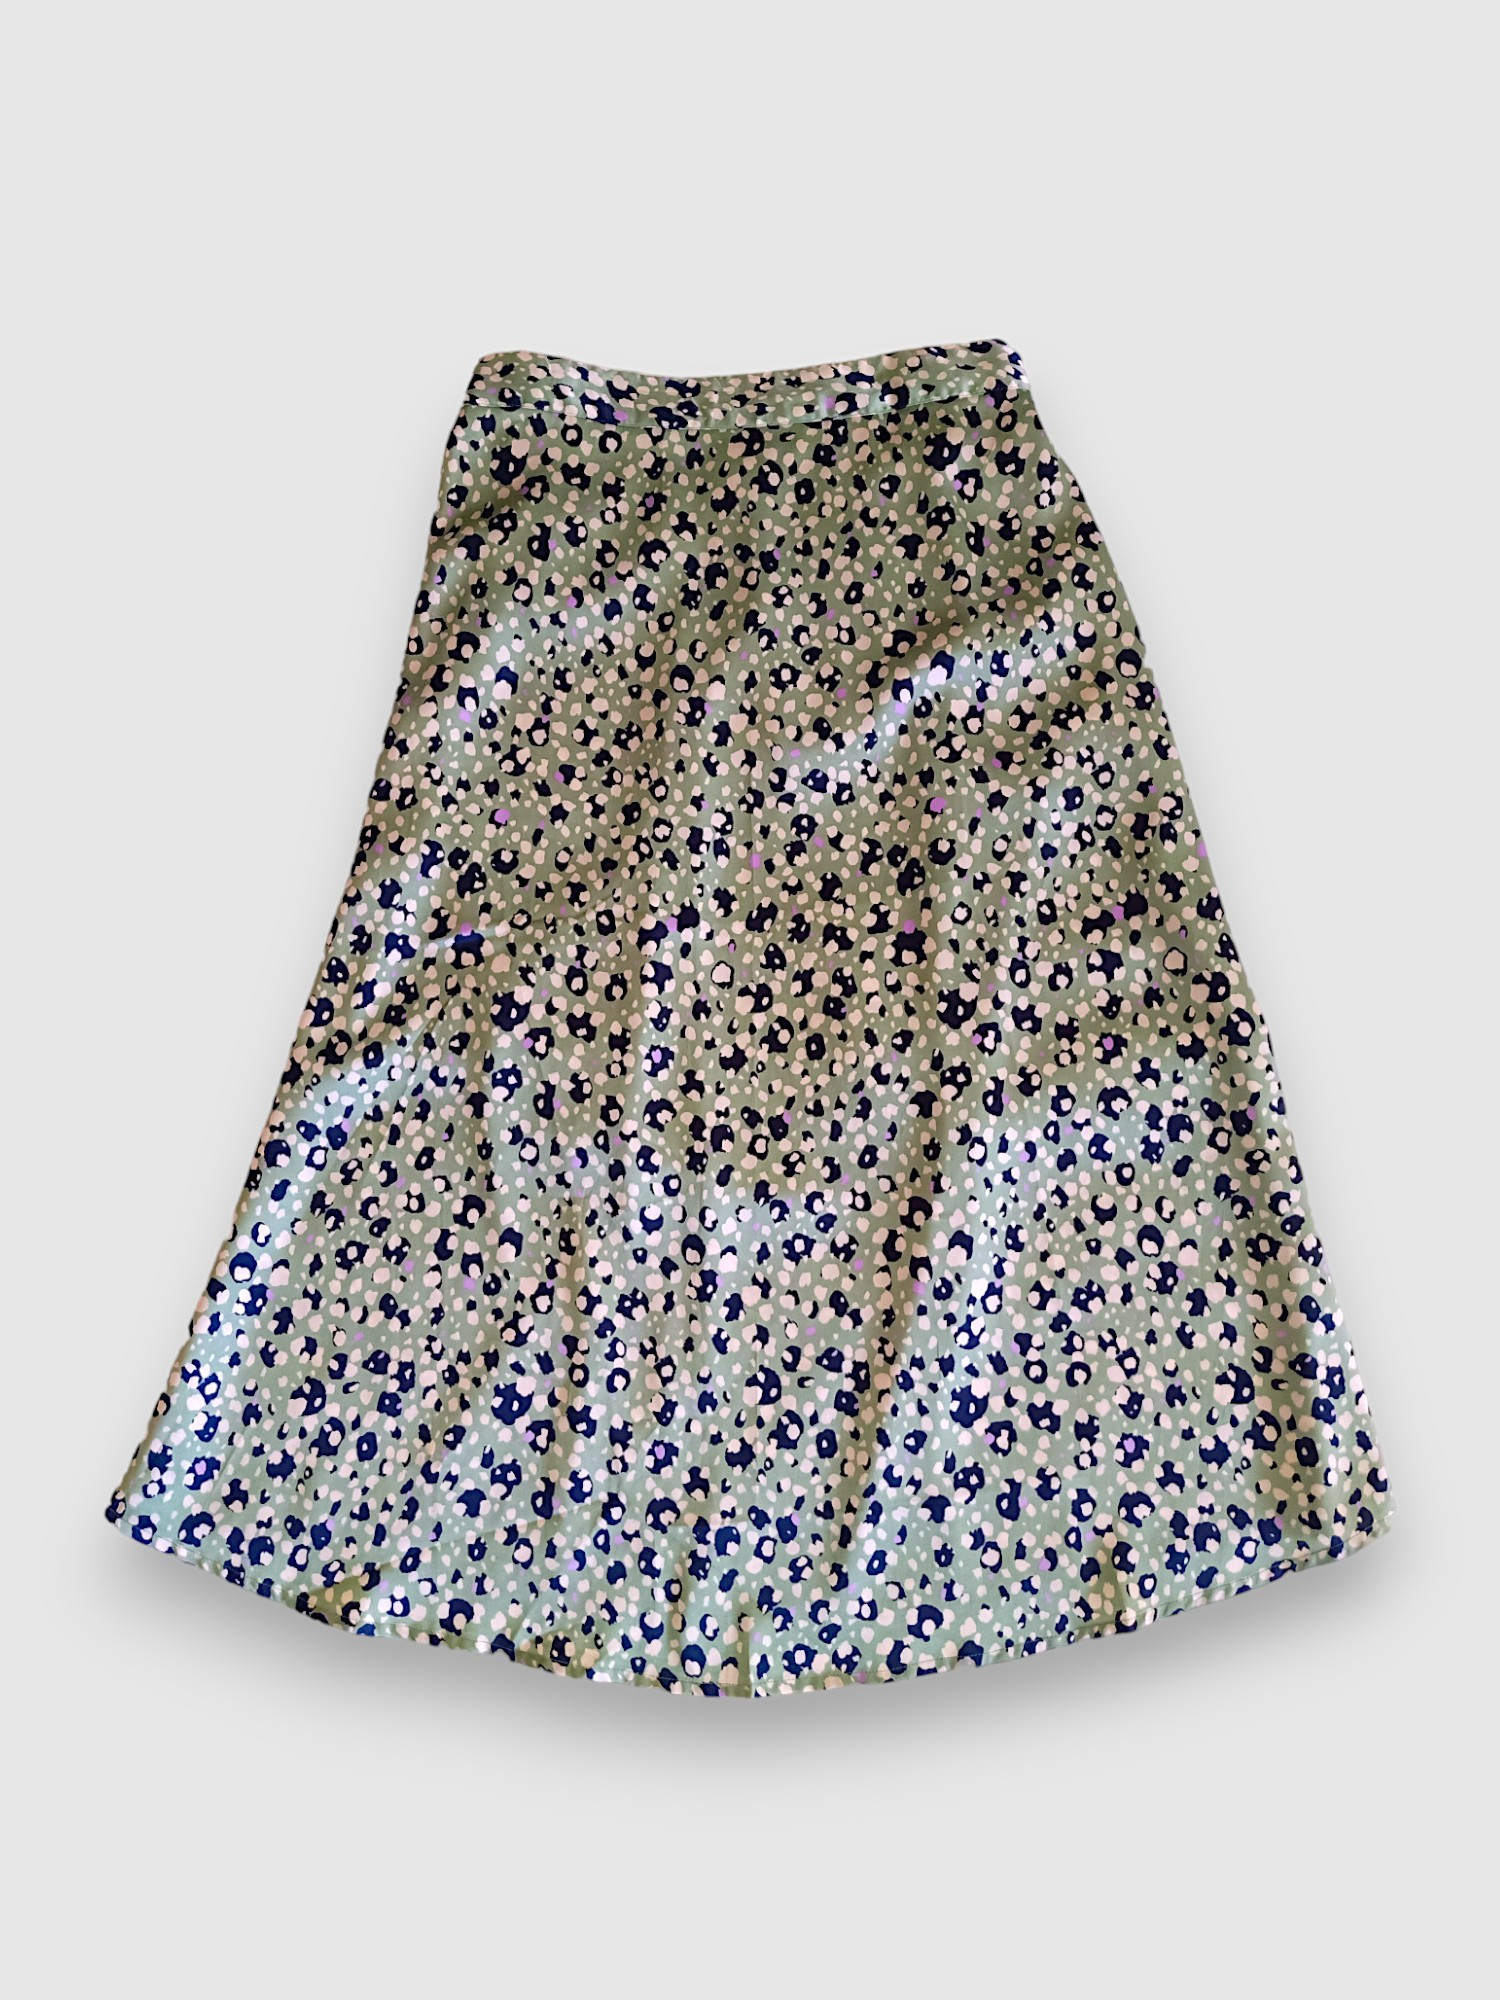 Maternity silk skirt - size M